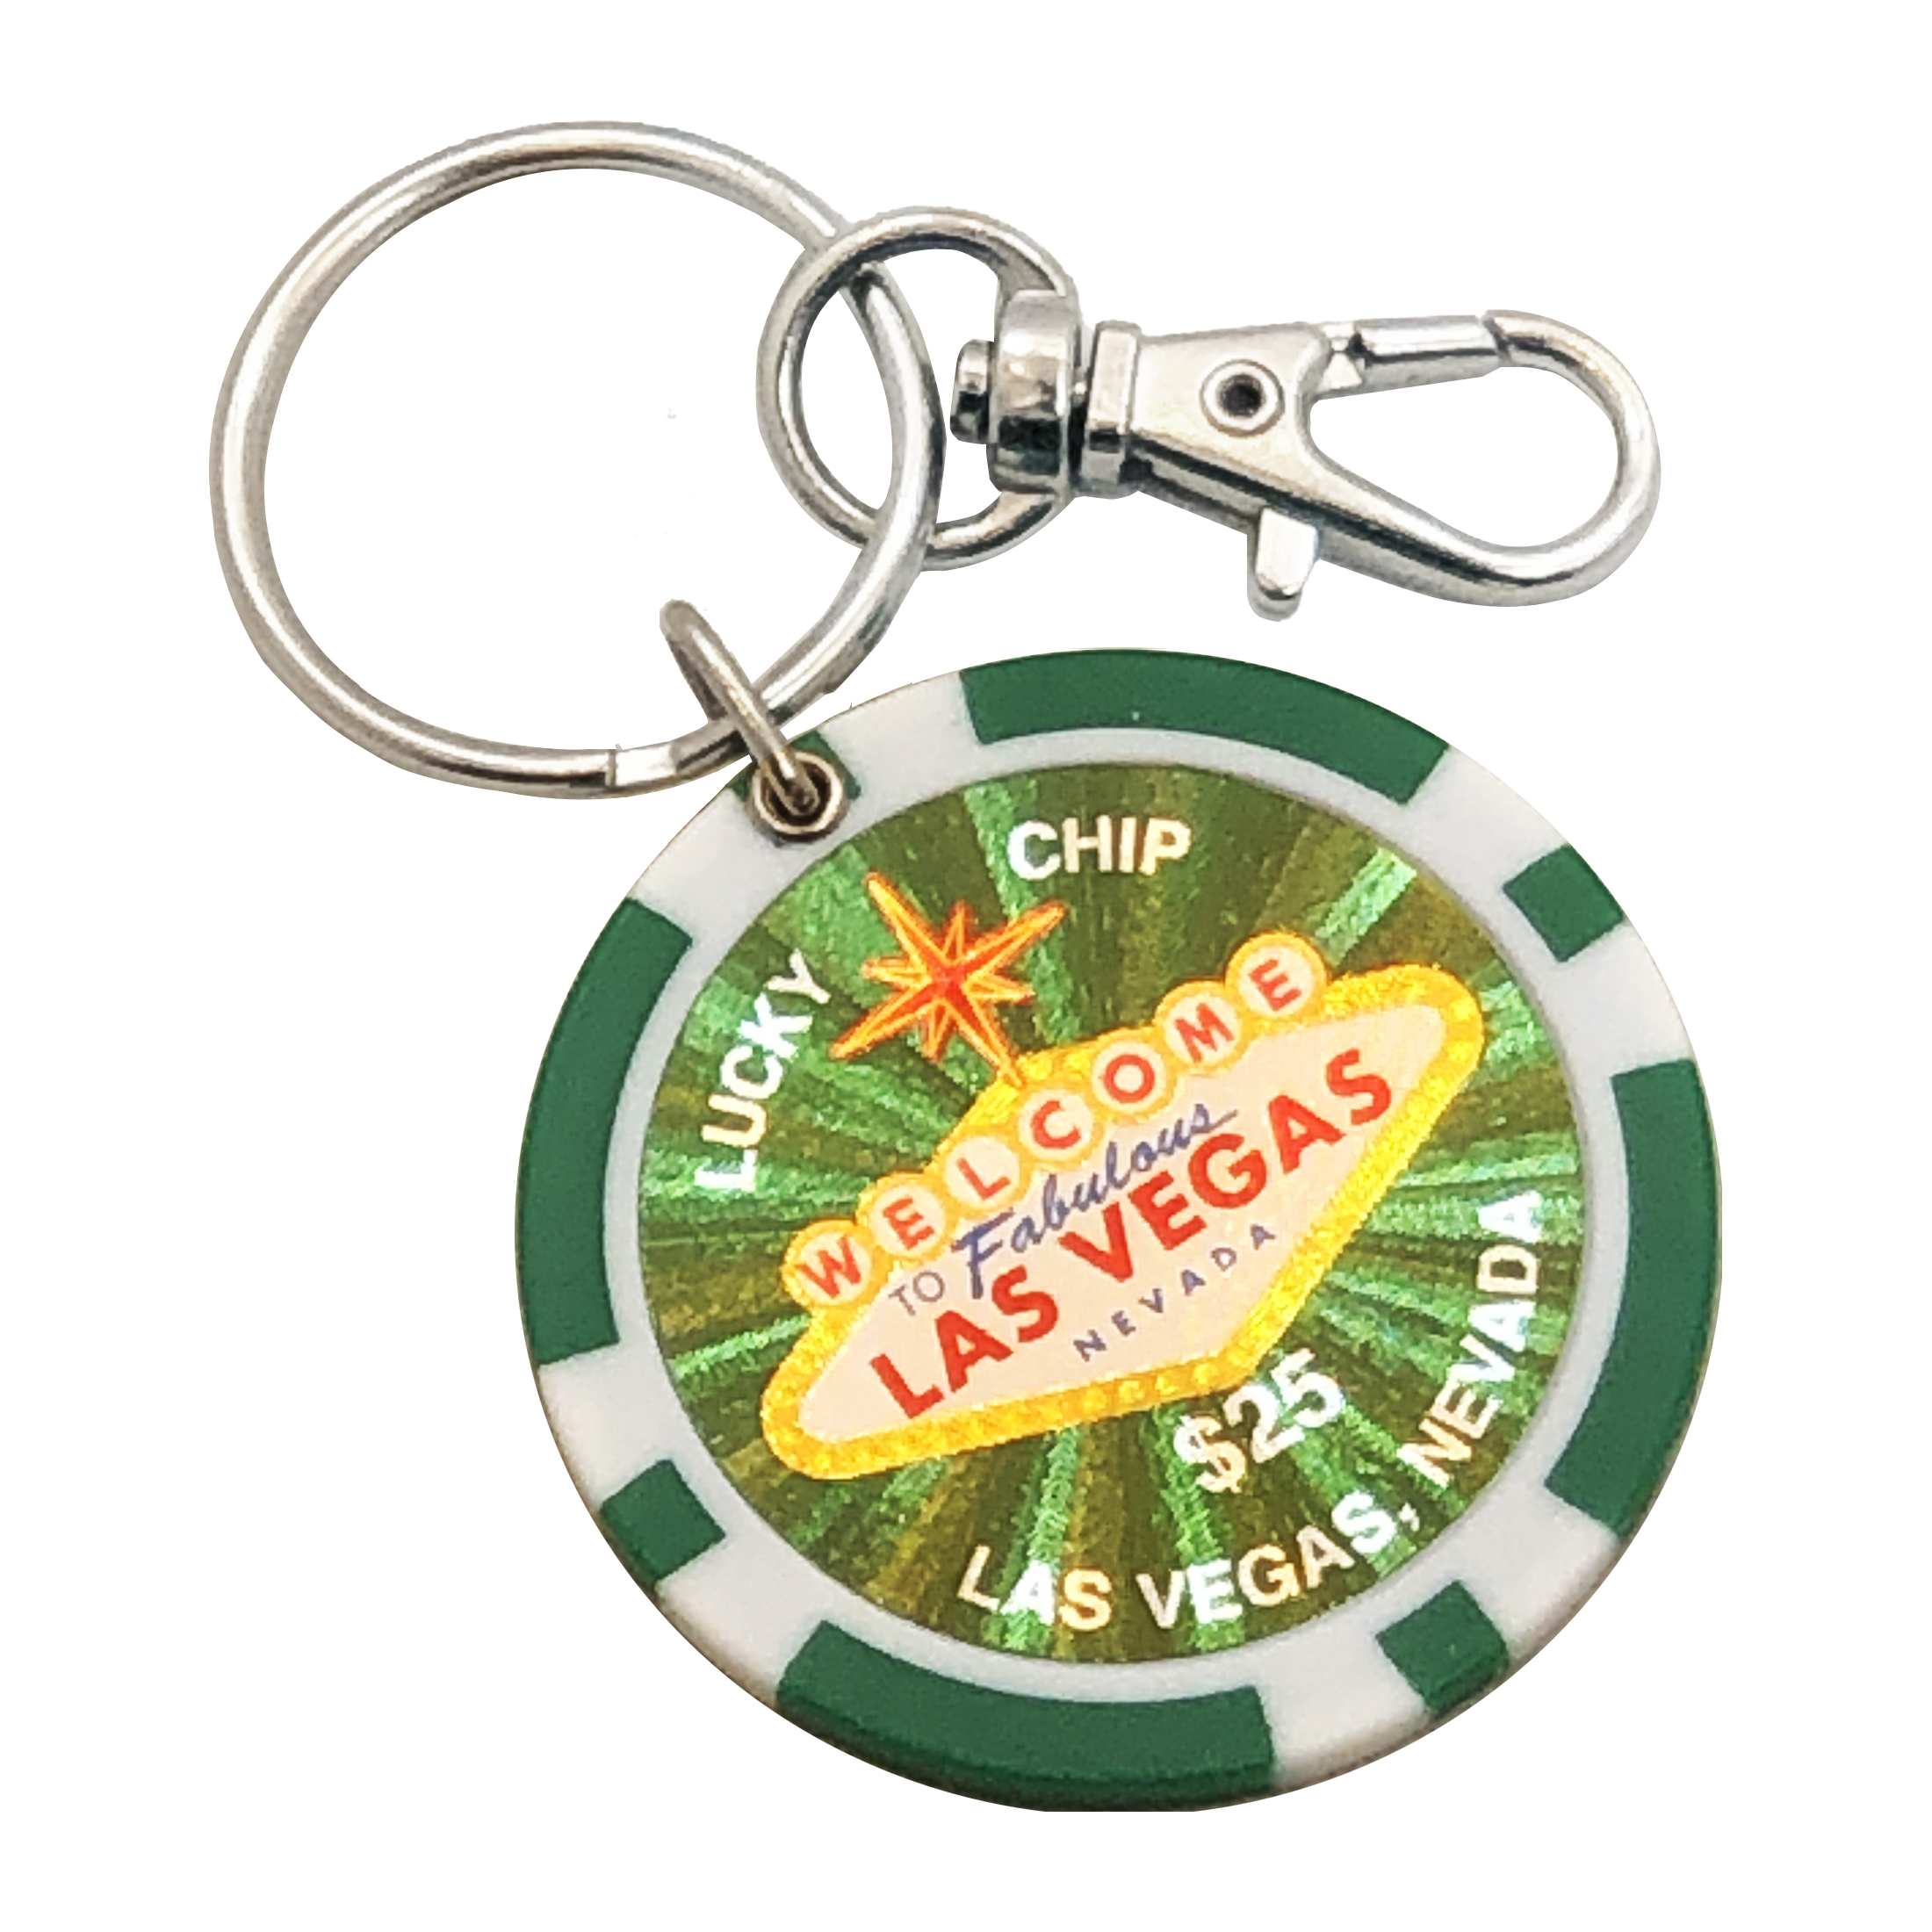 Las Vegas Key Chain, $25 Lucky Poker Chip